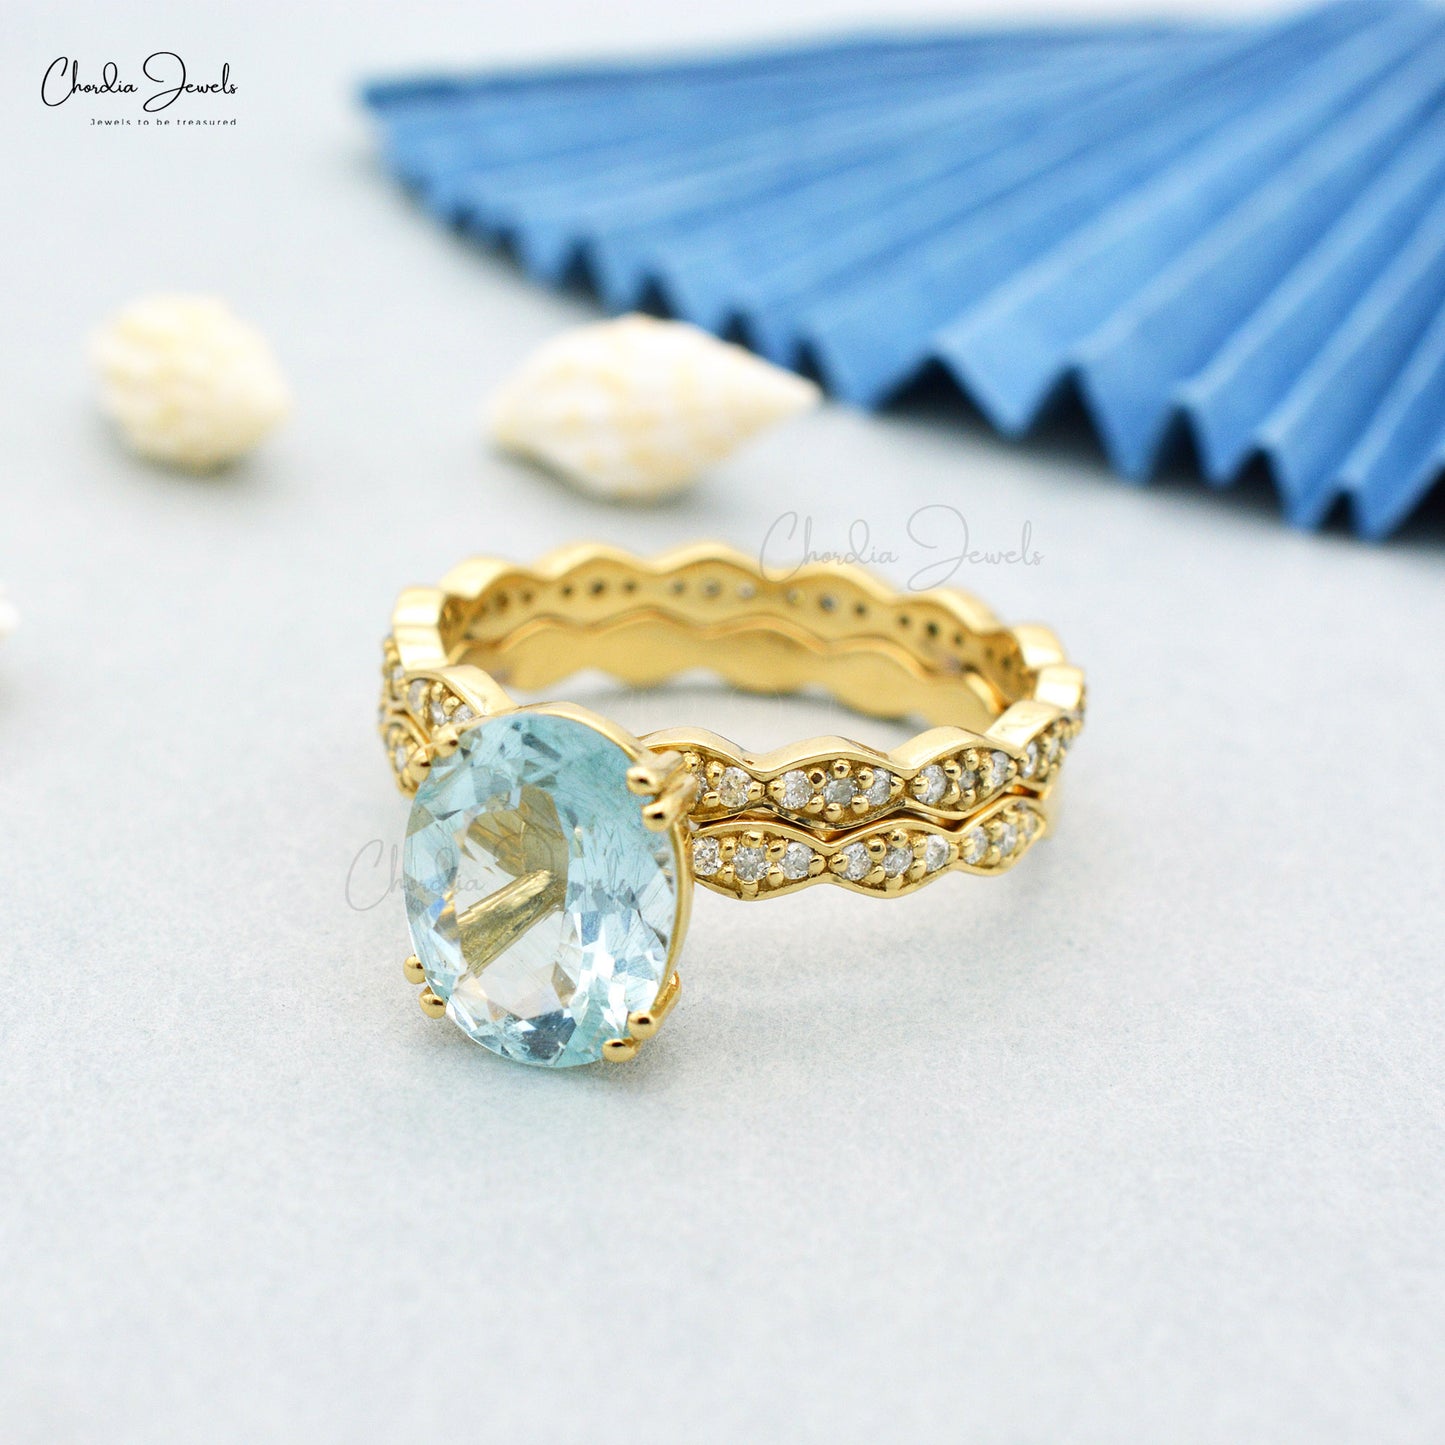 Vintage Gorgeous Natural Aquamarine Statement Ring 1.92 Ct Gemstone Stackable Ring 14k Solid Gold White Diamond Wedding Band Hallmarked Jewelry For Valentine